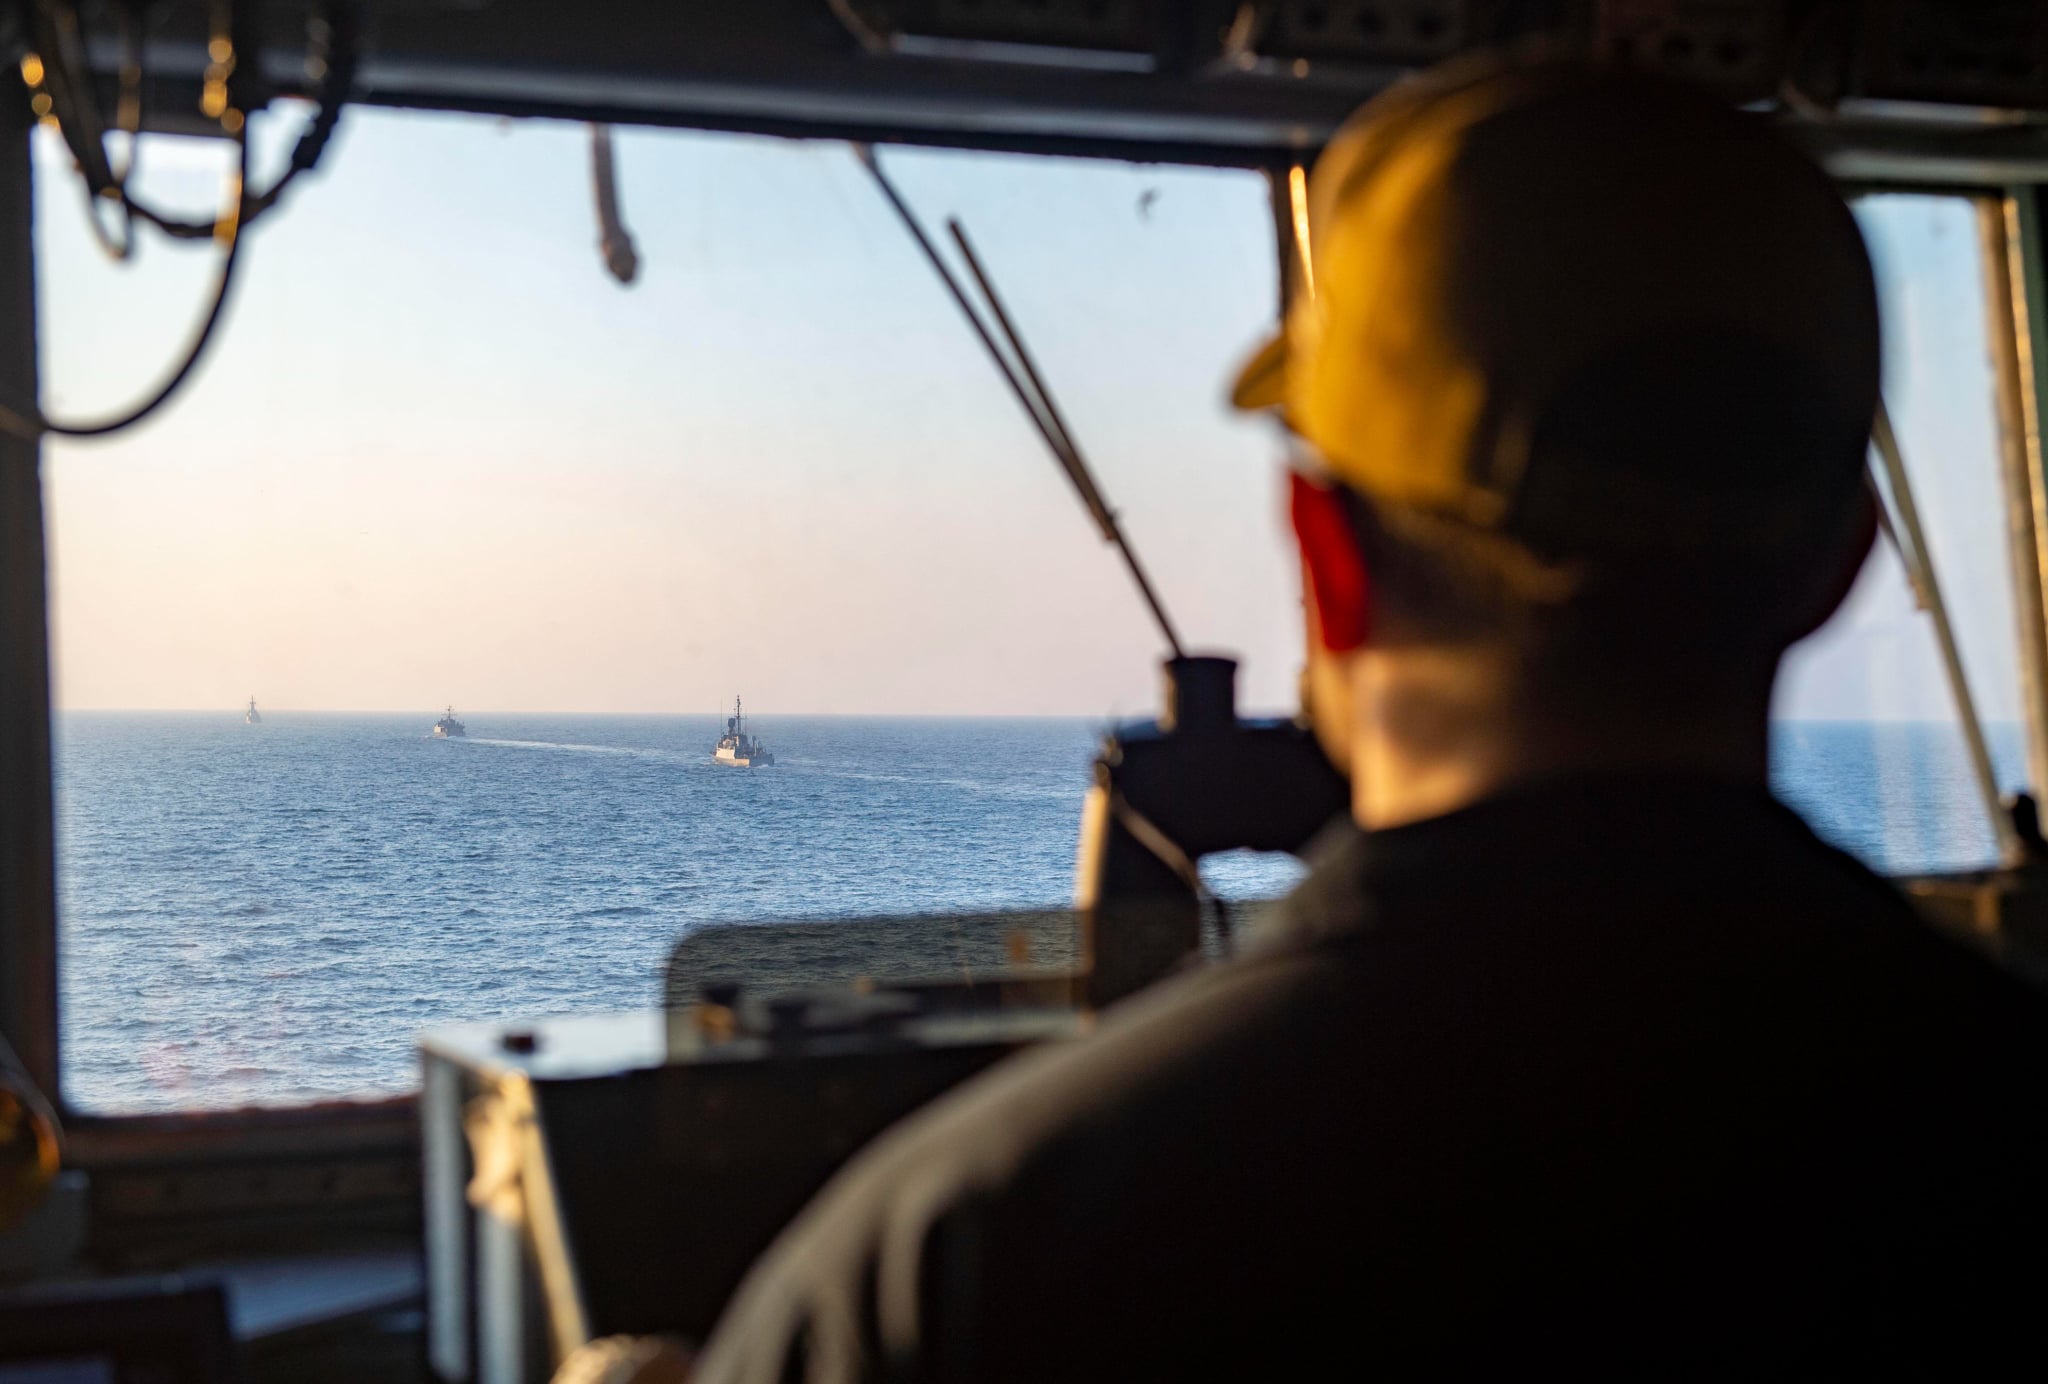 US Navy sailors reported missing off Somalian coast